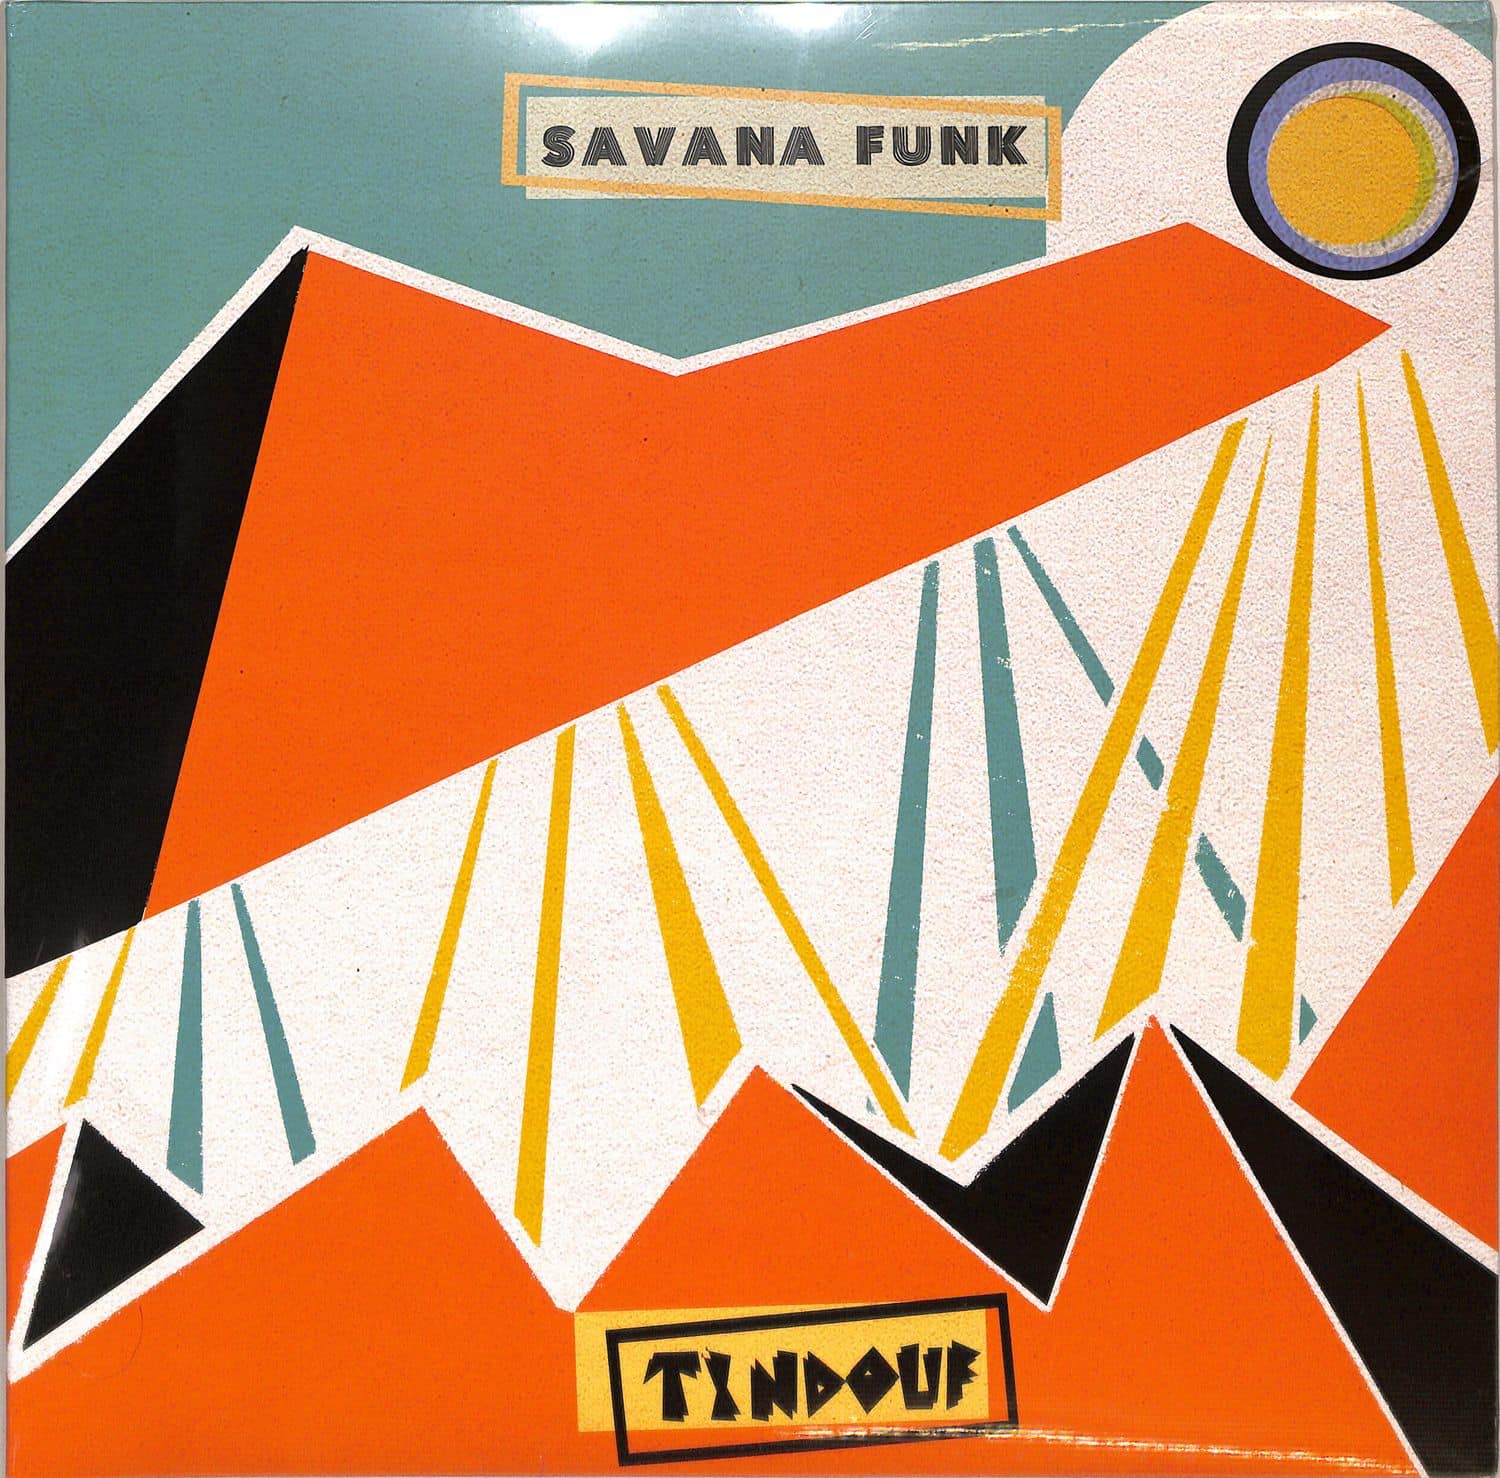 Savana Funk - TINDOUF 